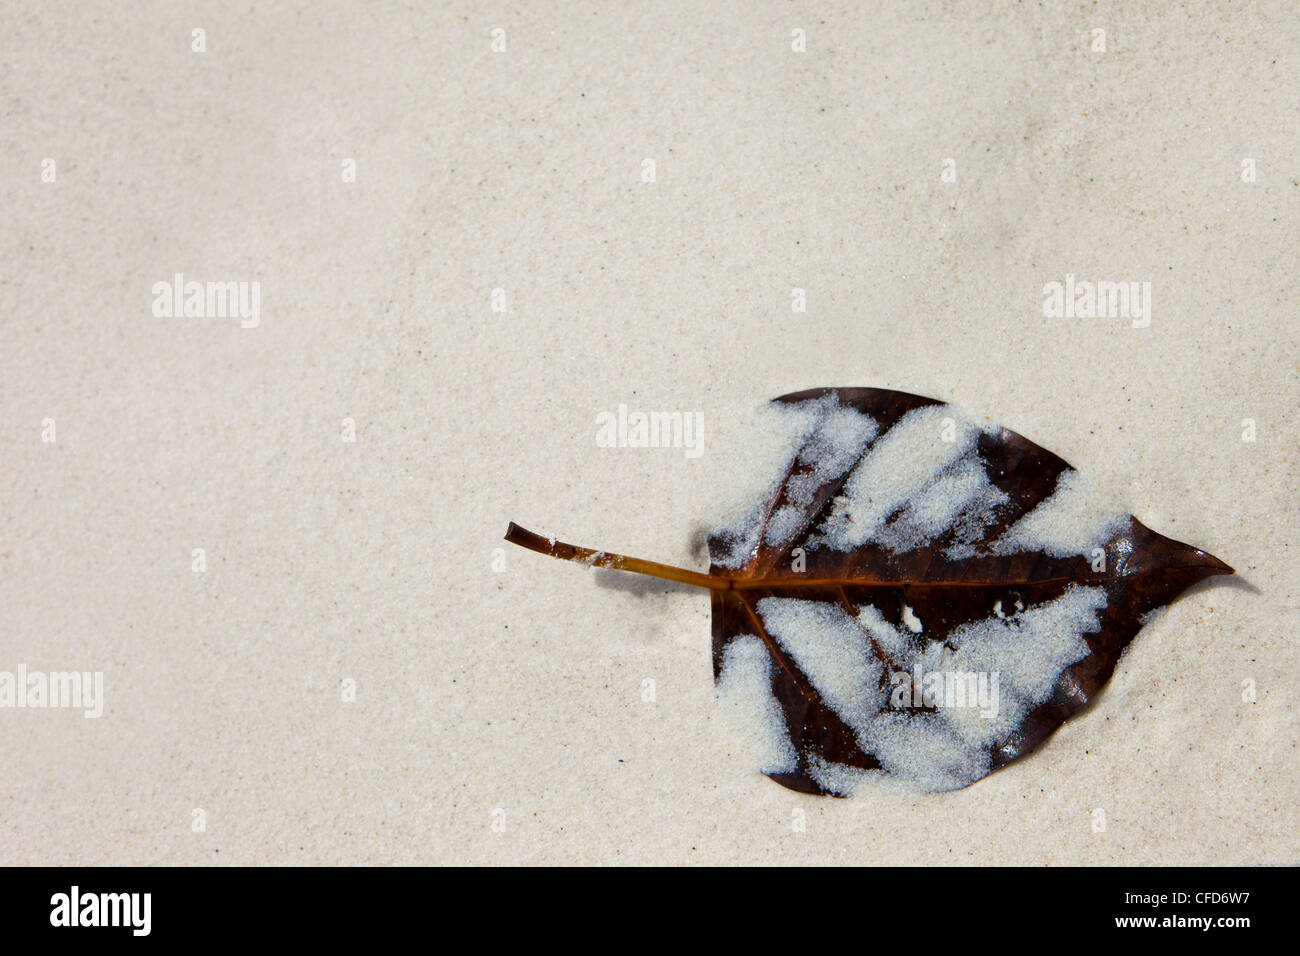 Washed up leaf onto fine white sand, Similan Islands, Andaman Sea, Thailand Stock Photo